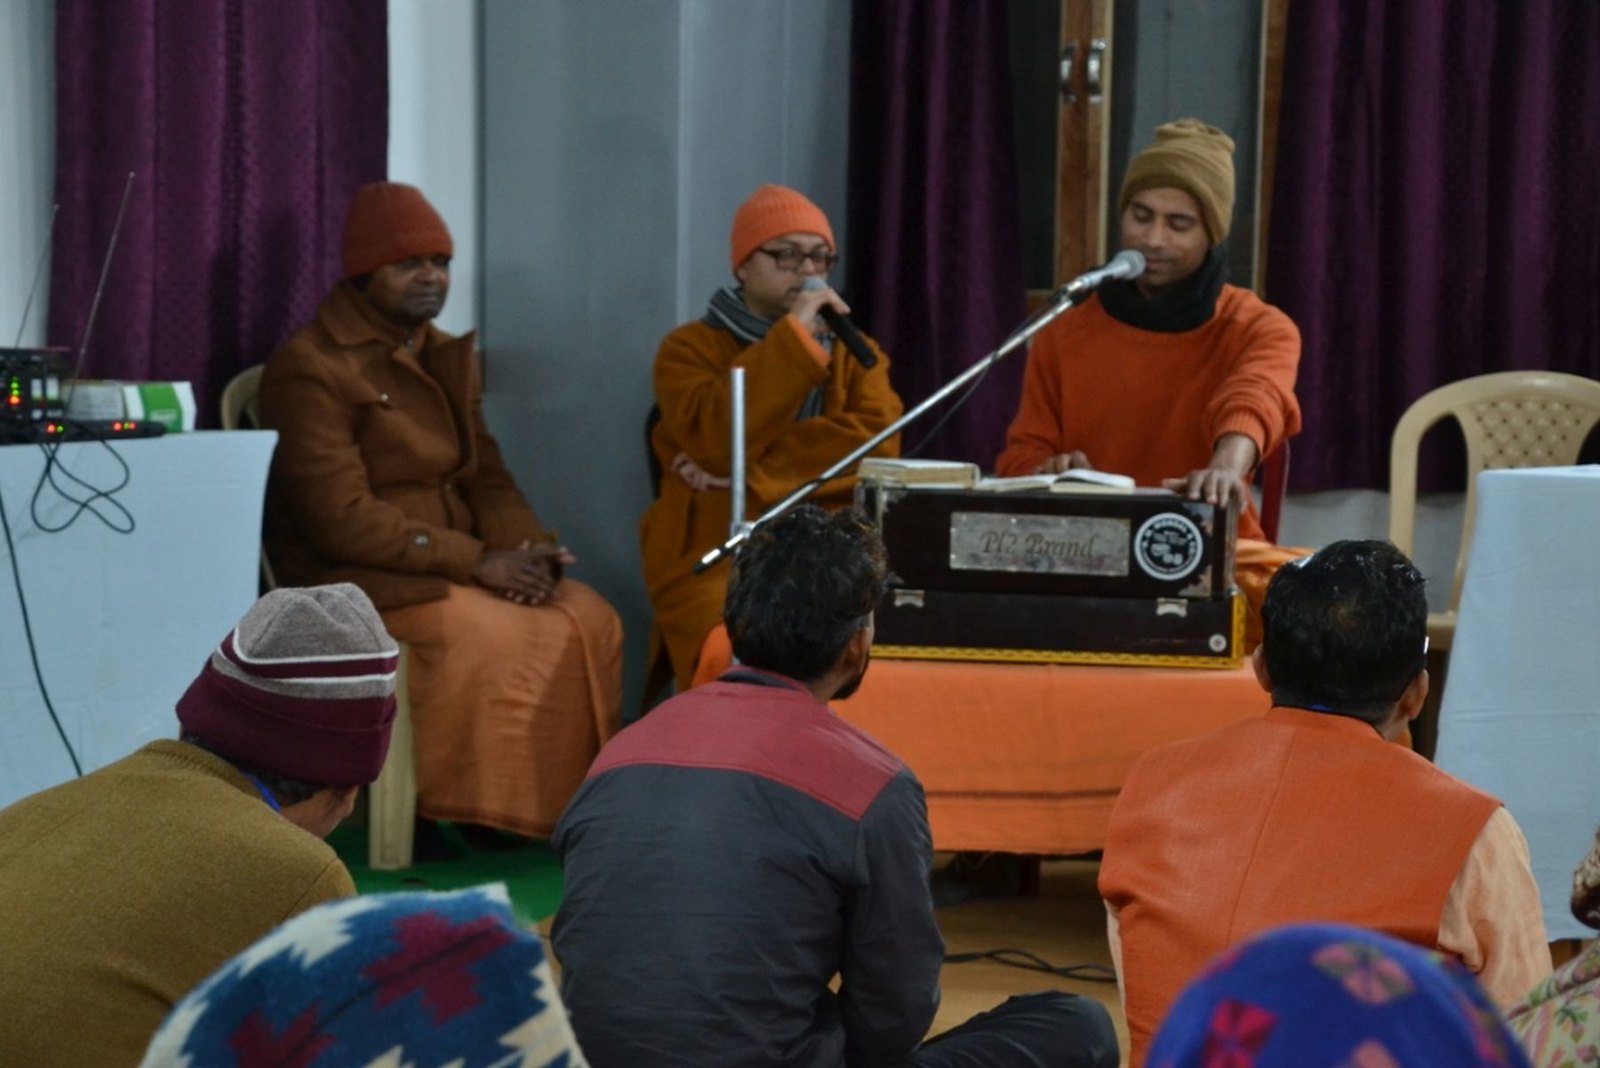 3-Day Spiritual Retreat at Shyamlatal, March 2020